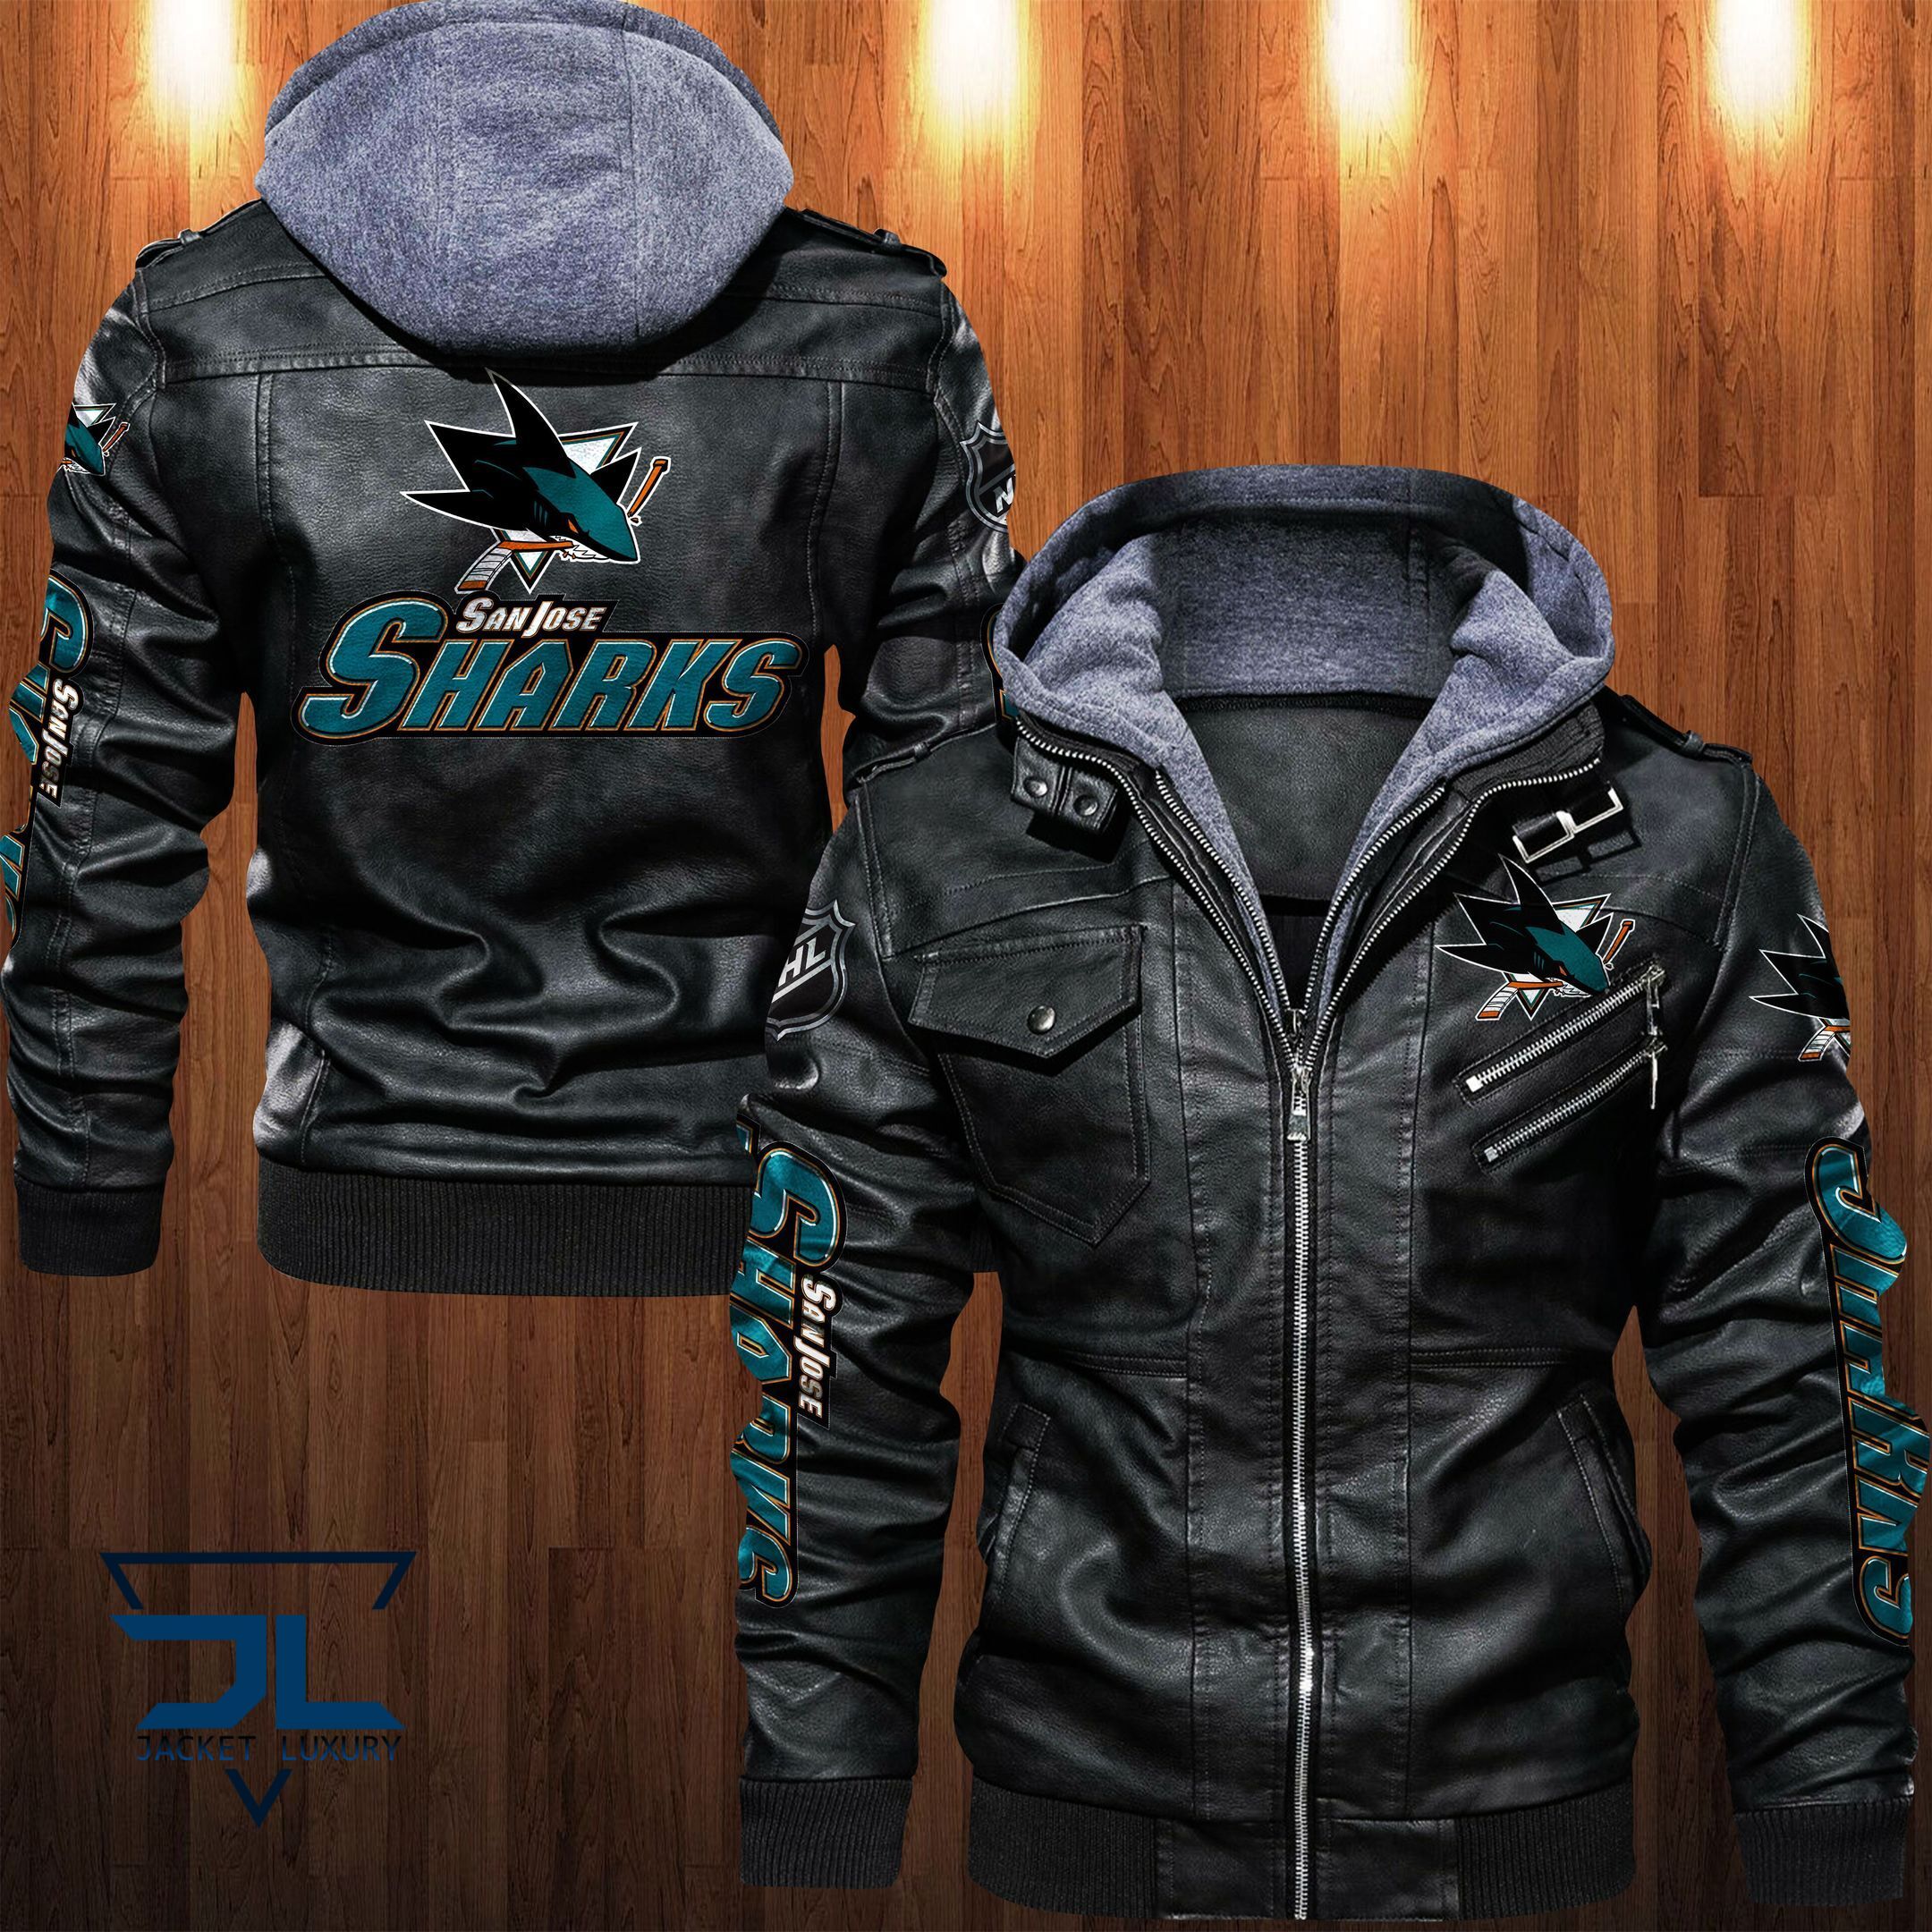 What Leather jacket Sells Best on Techcomshop? 182